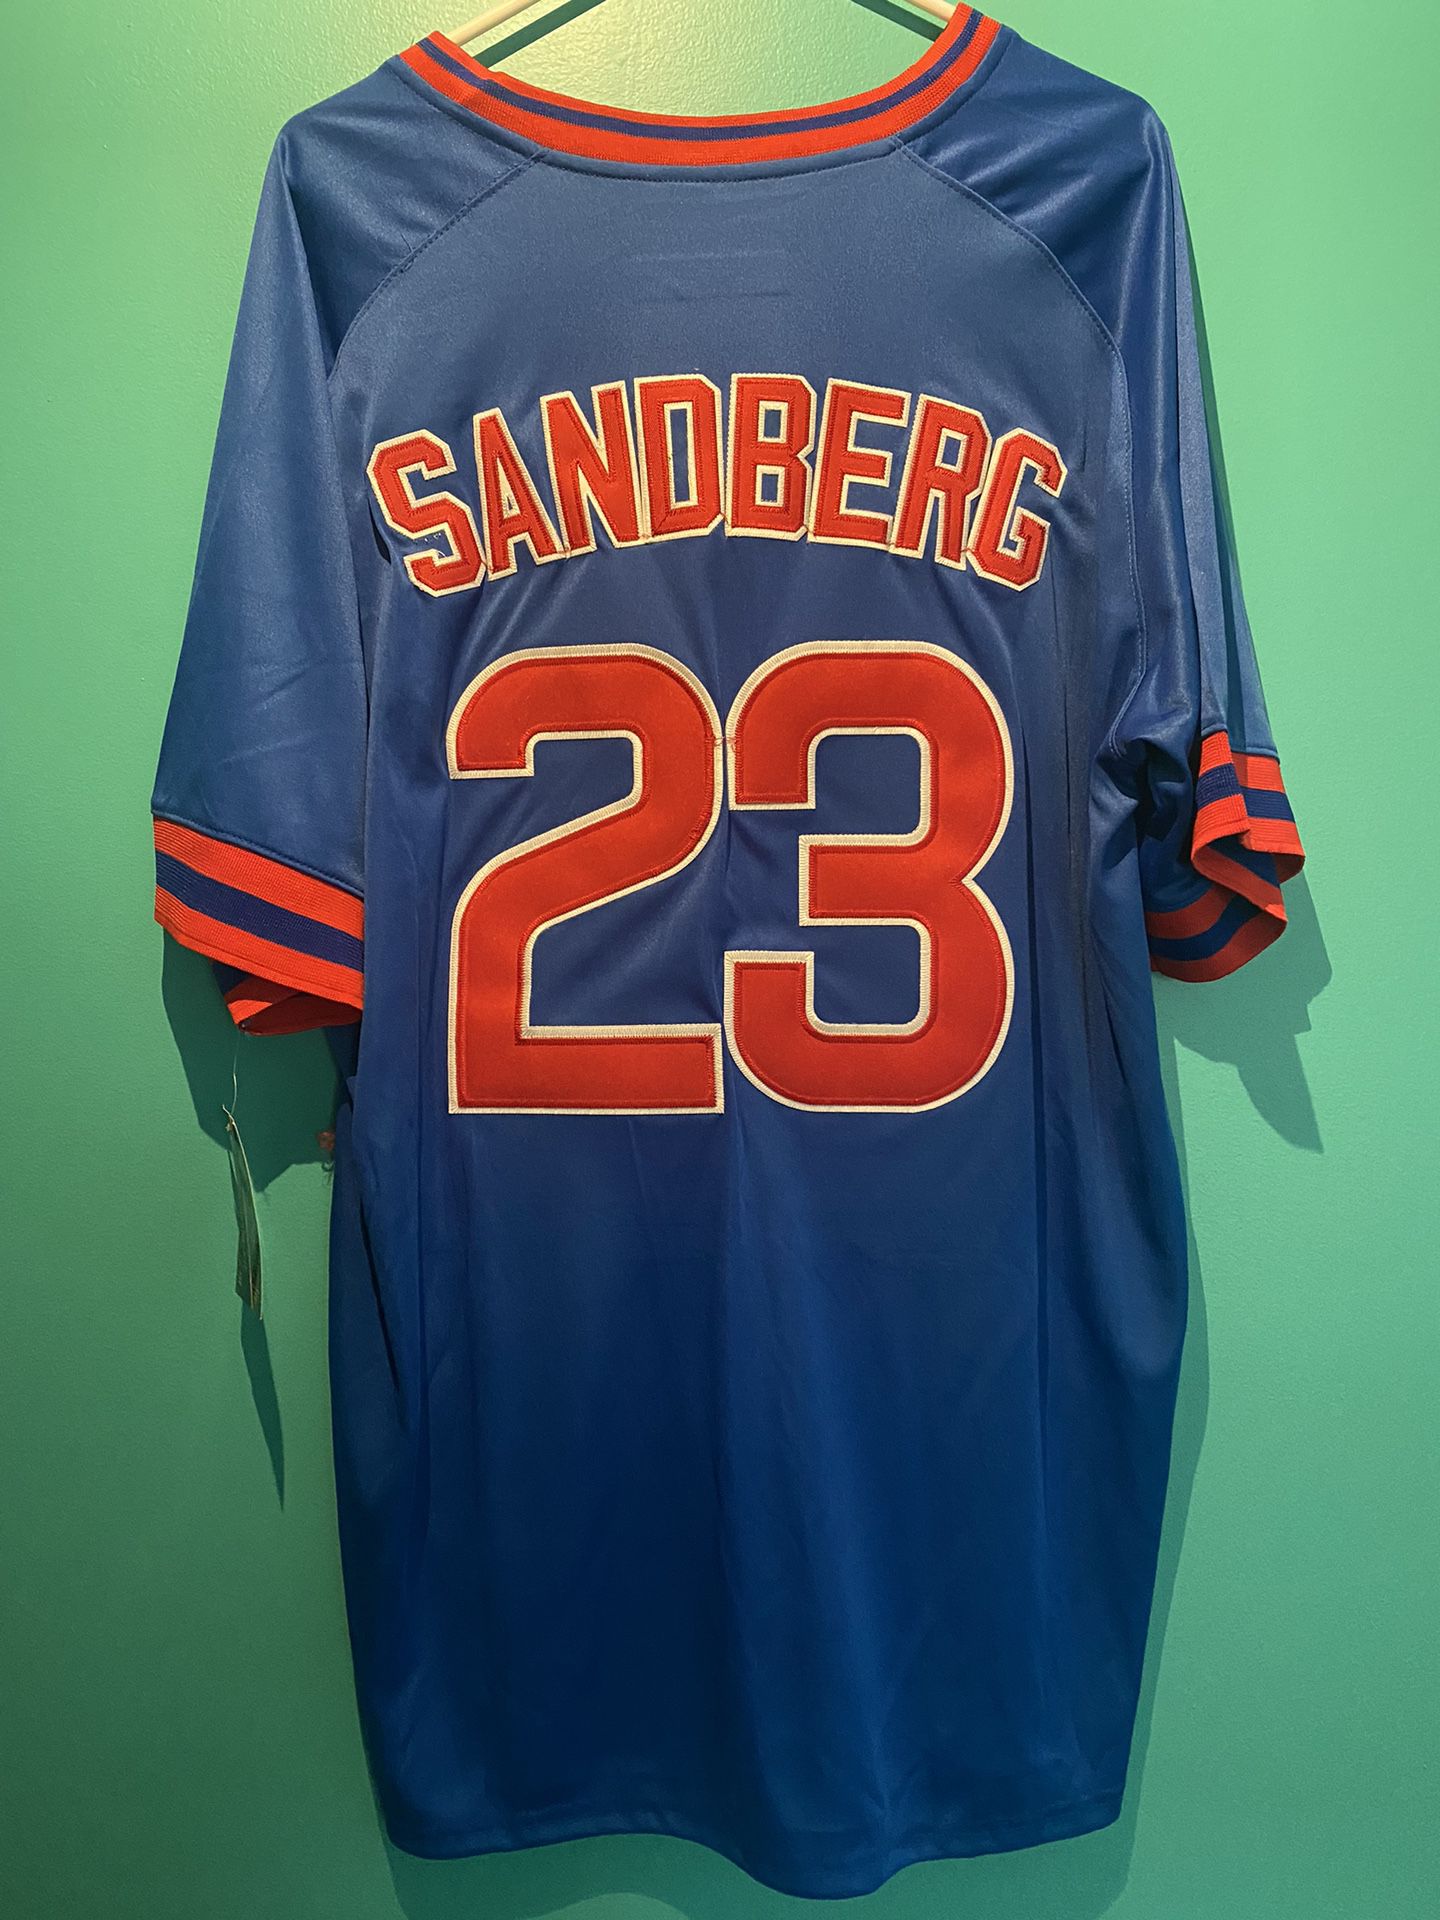 Chicago Cubs Ryan Sandberg Blue Jersey Size 2XL